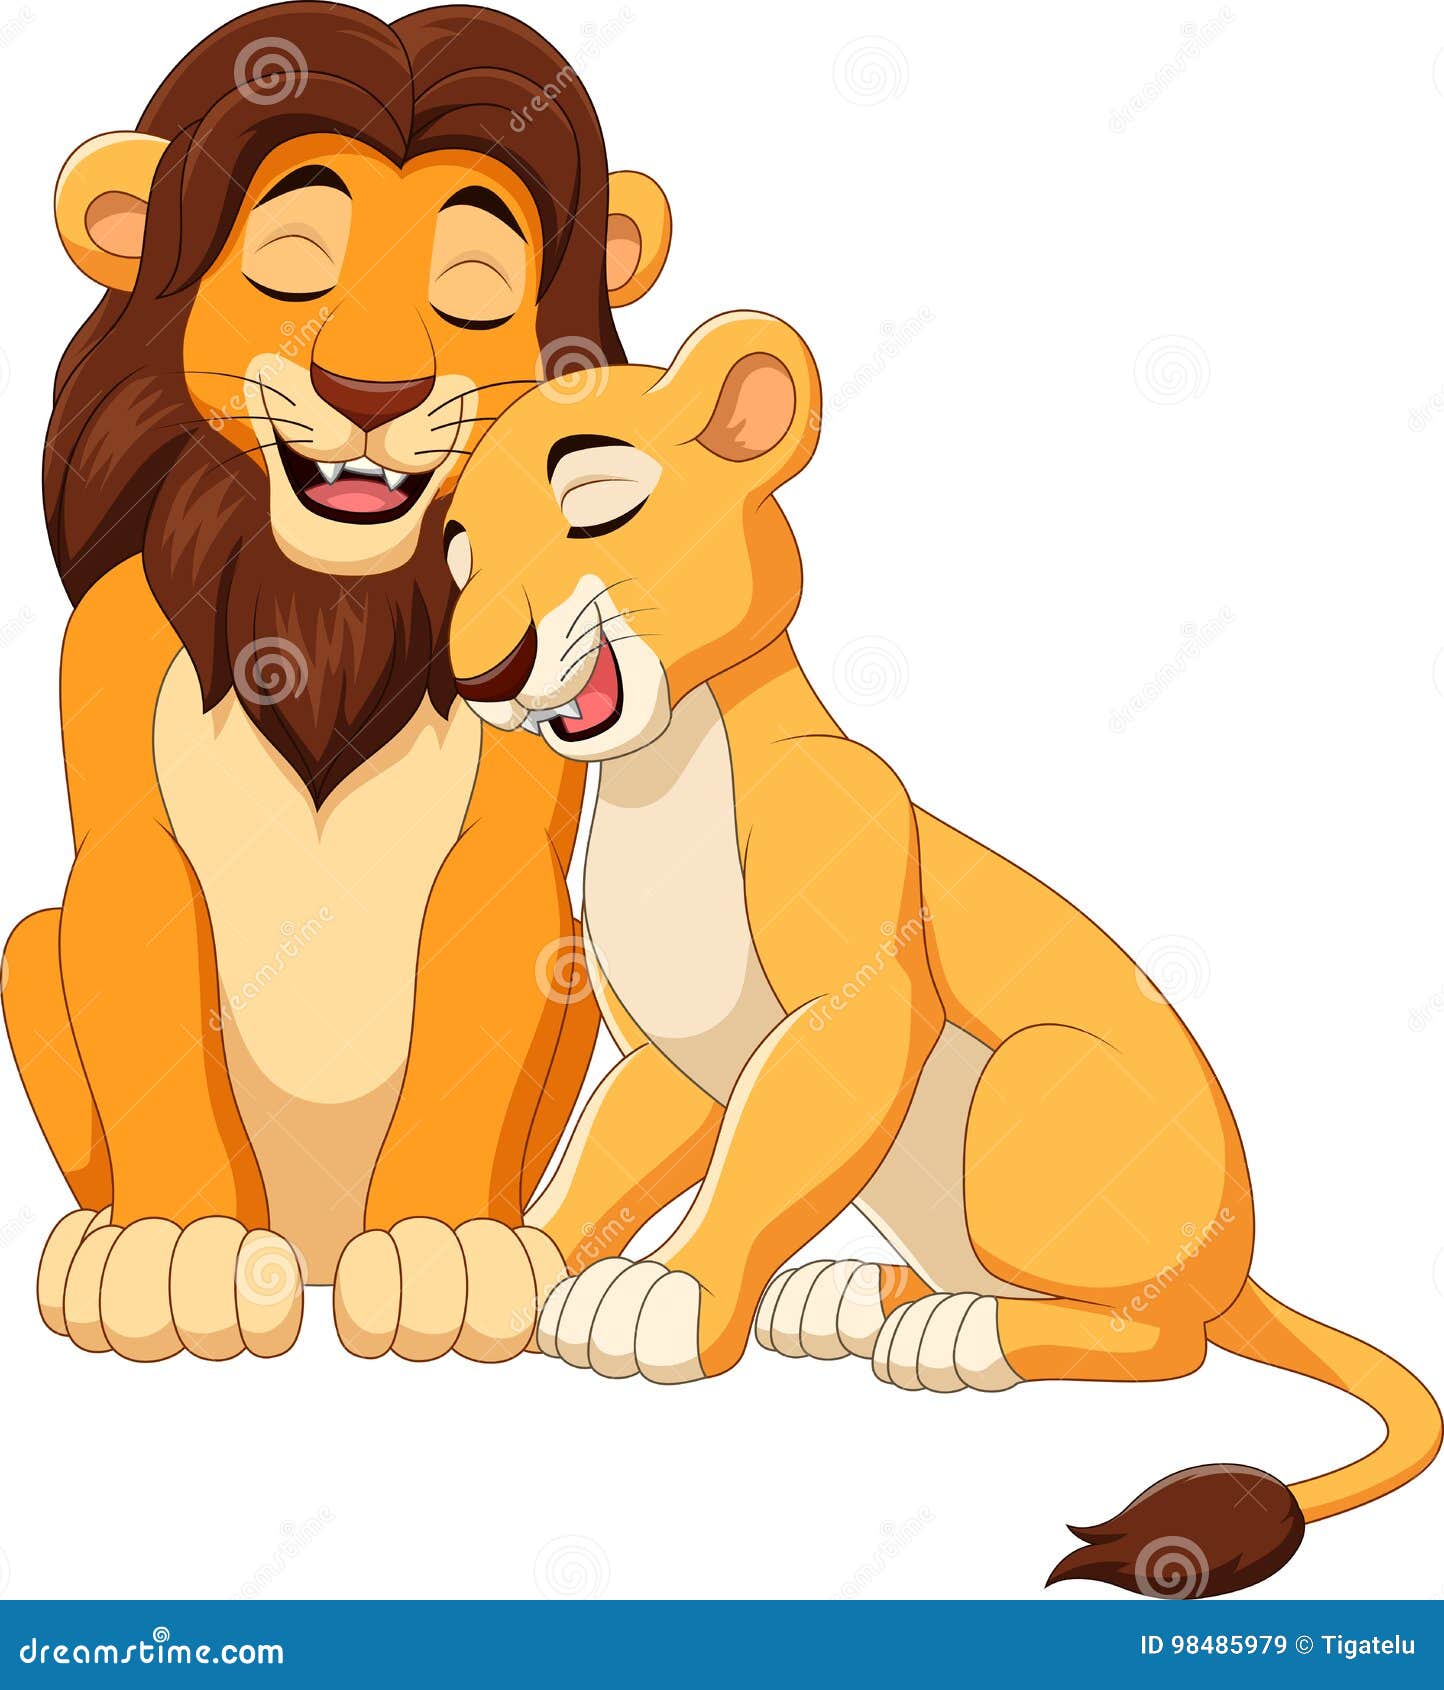 lion, cartoon lion, cartoon animal - Stock Image - Everypixel